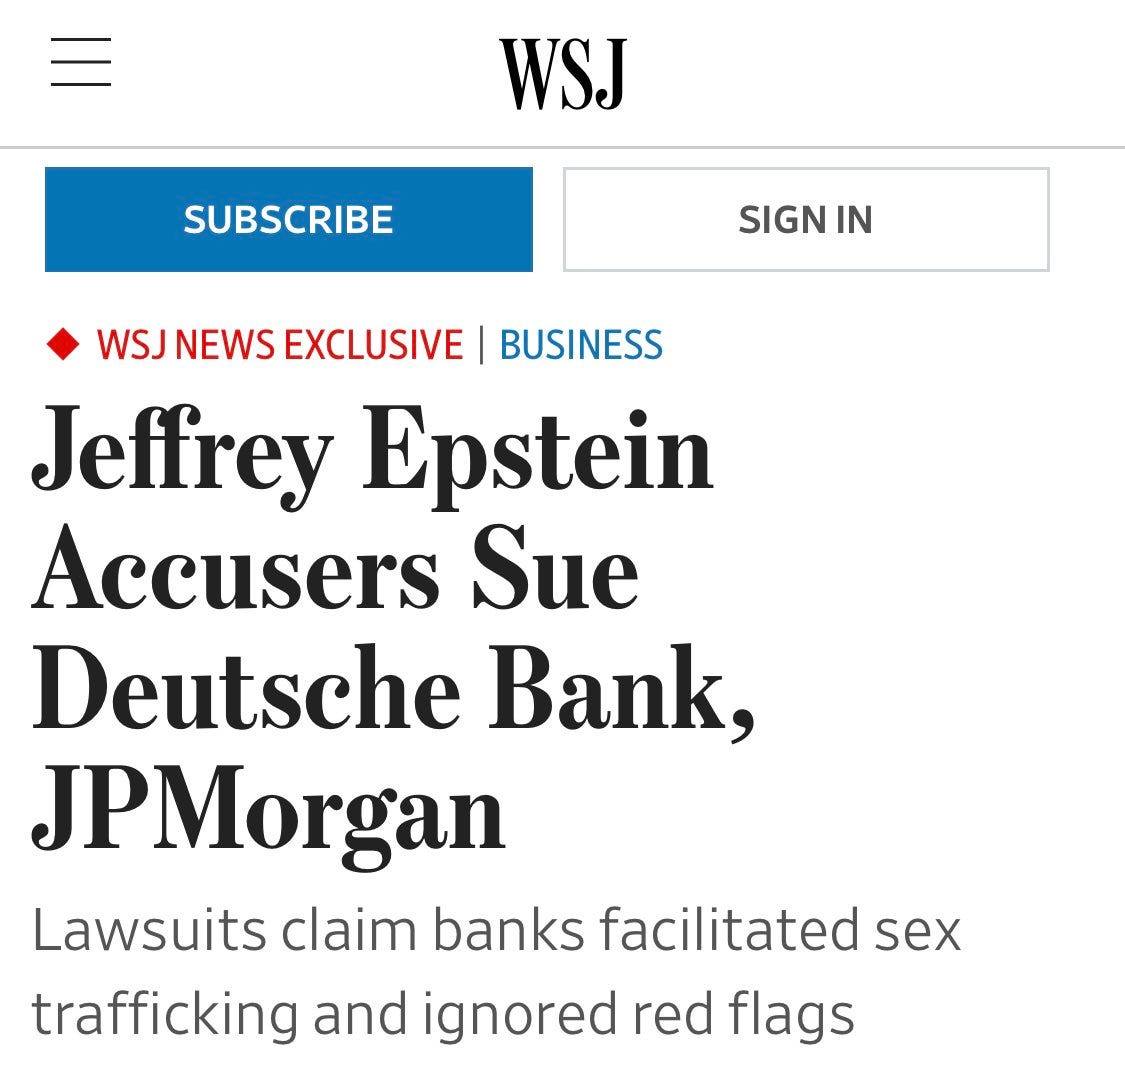 Major banks roped into Jeffery Epstein human trafficking operation